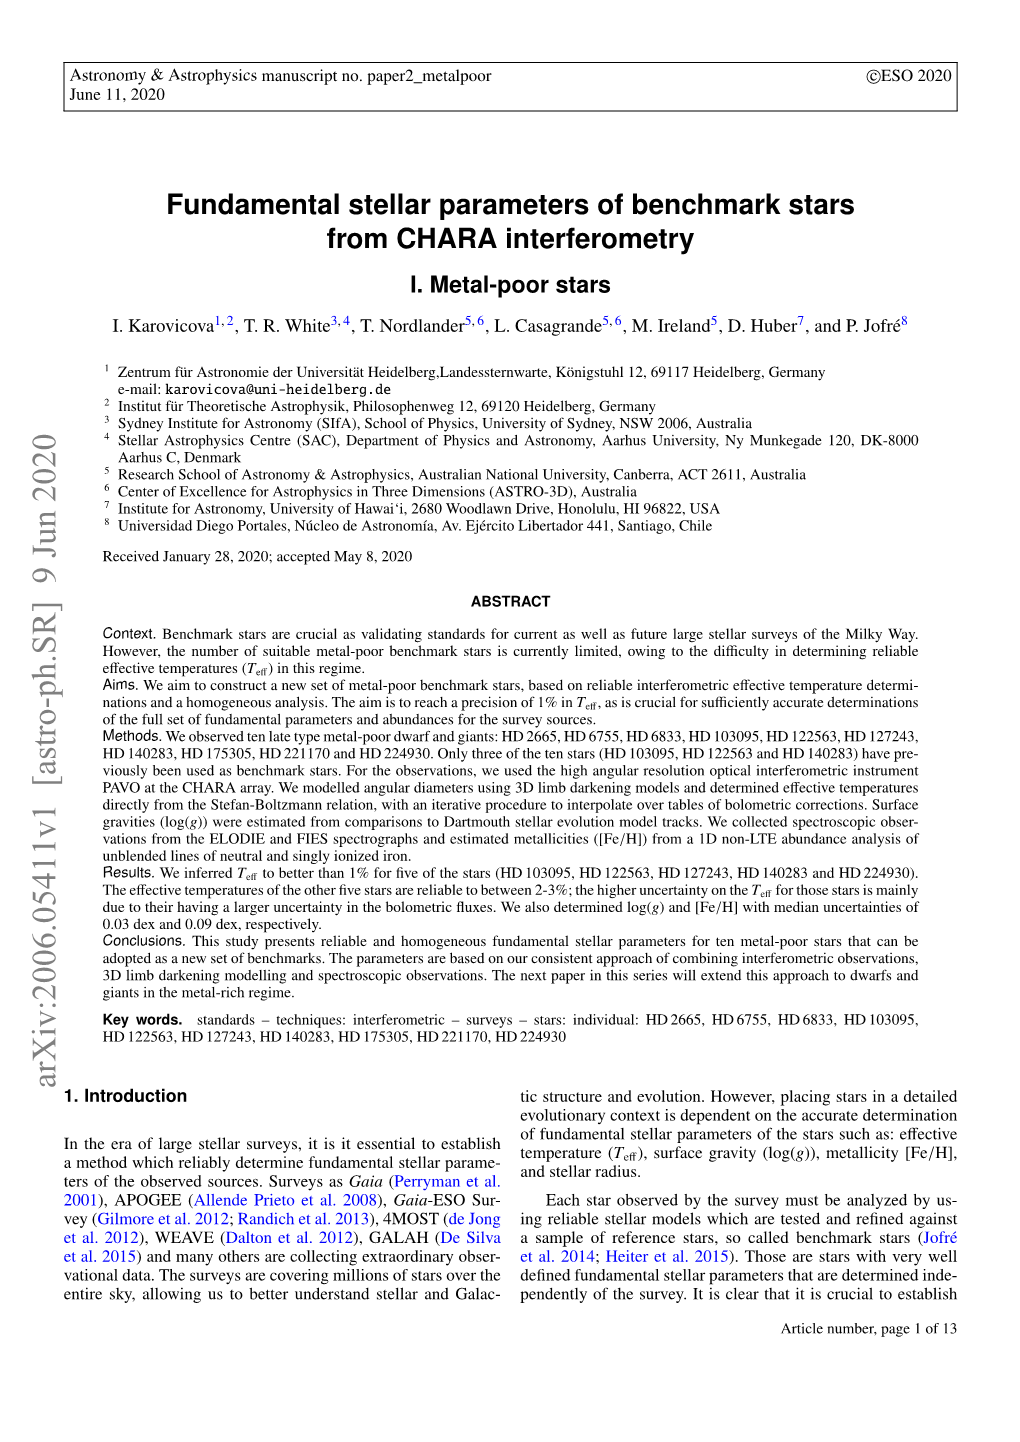 Fundamental Stellar Parameters of Benchmark Stars from CHARA Interferometry I